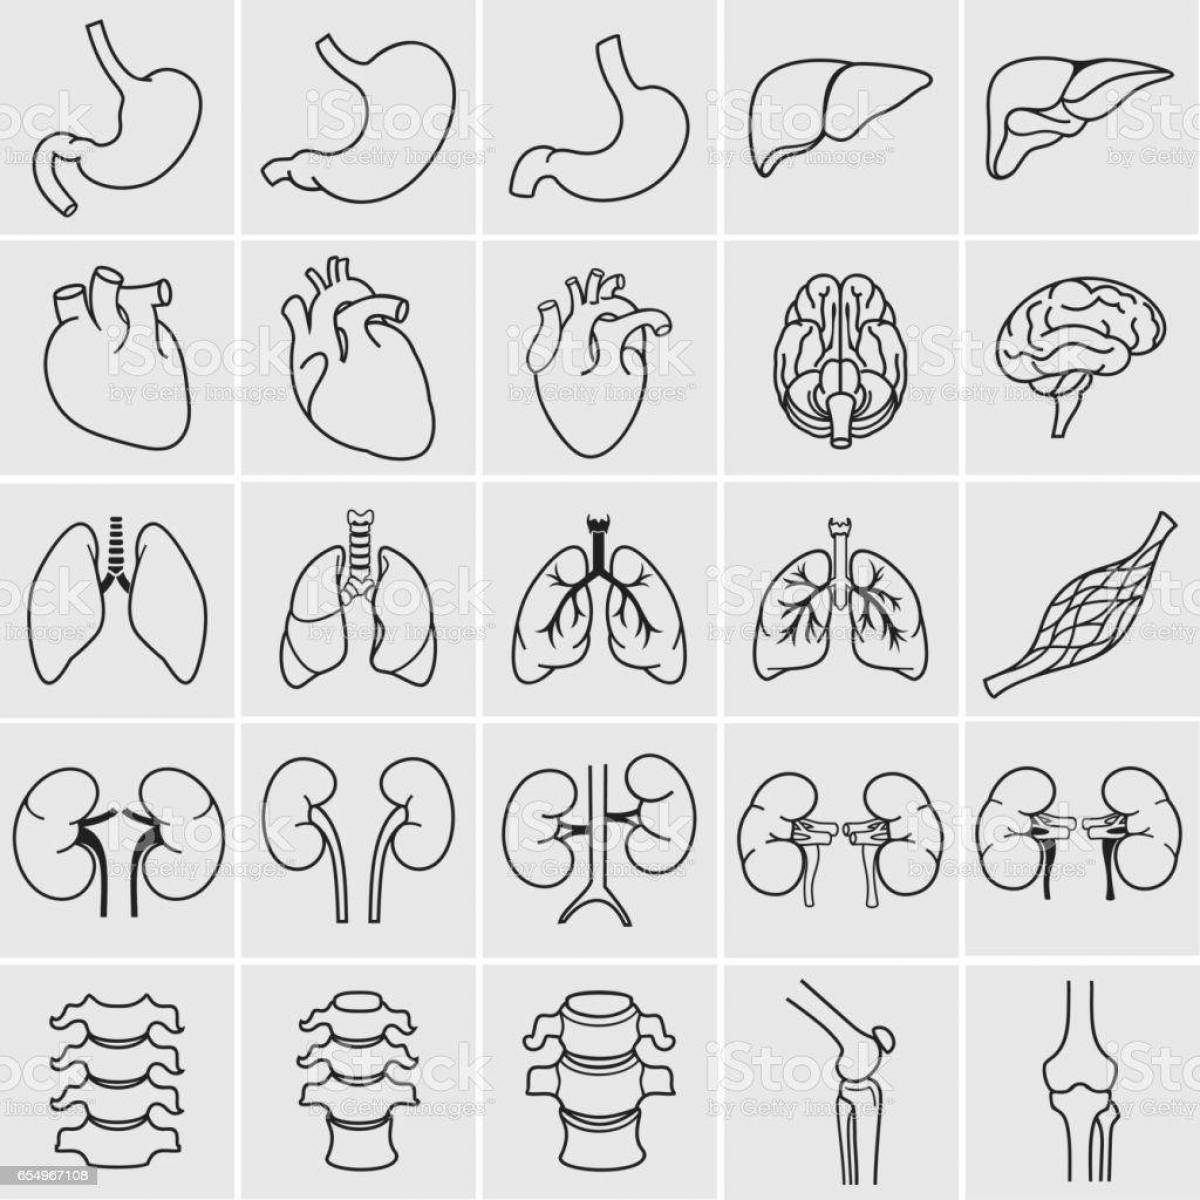 Animated coloring of human internal organs